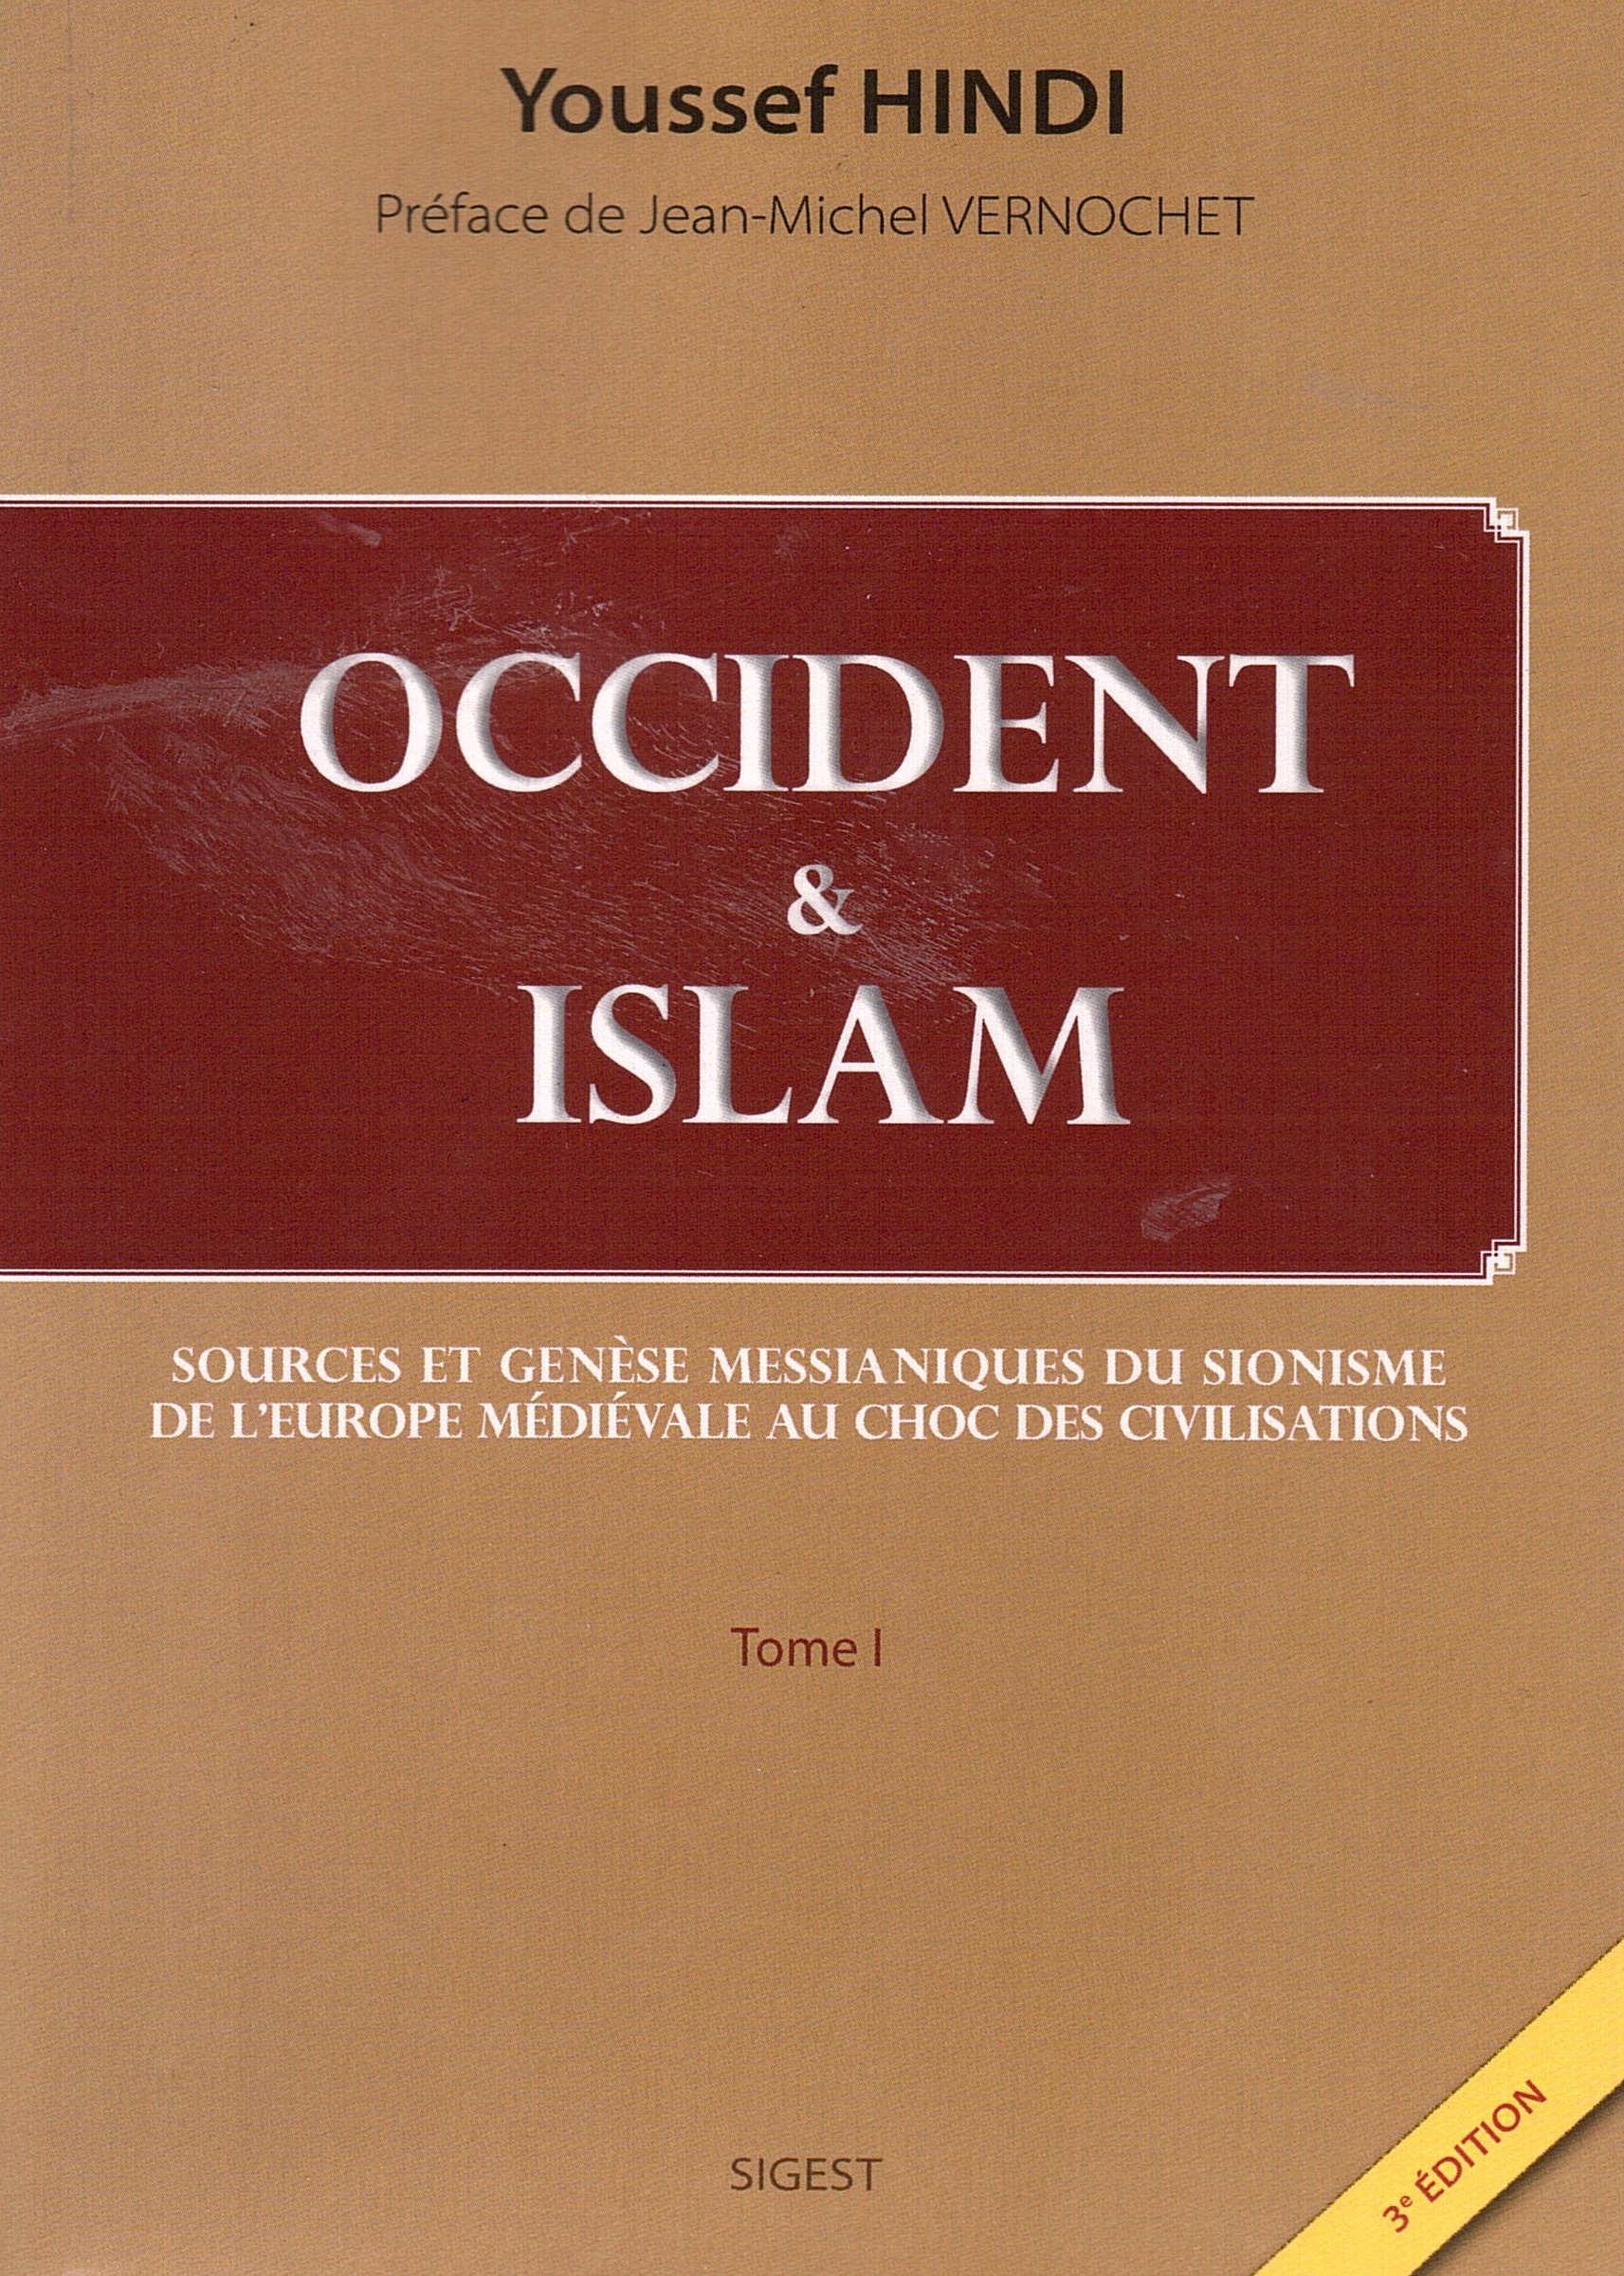 occident et islam youssef hindi 001